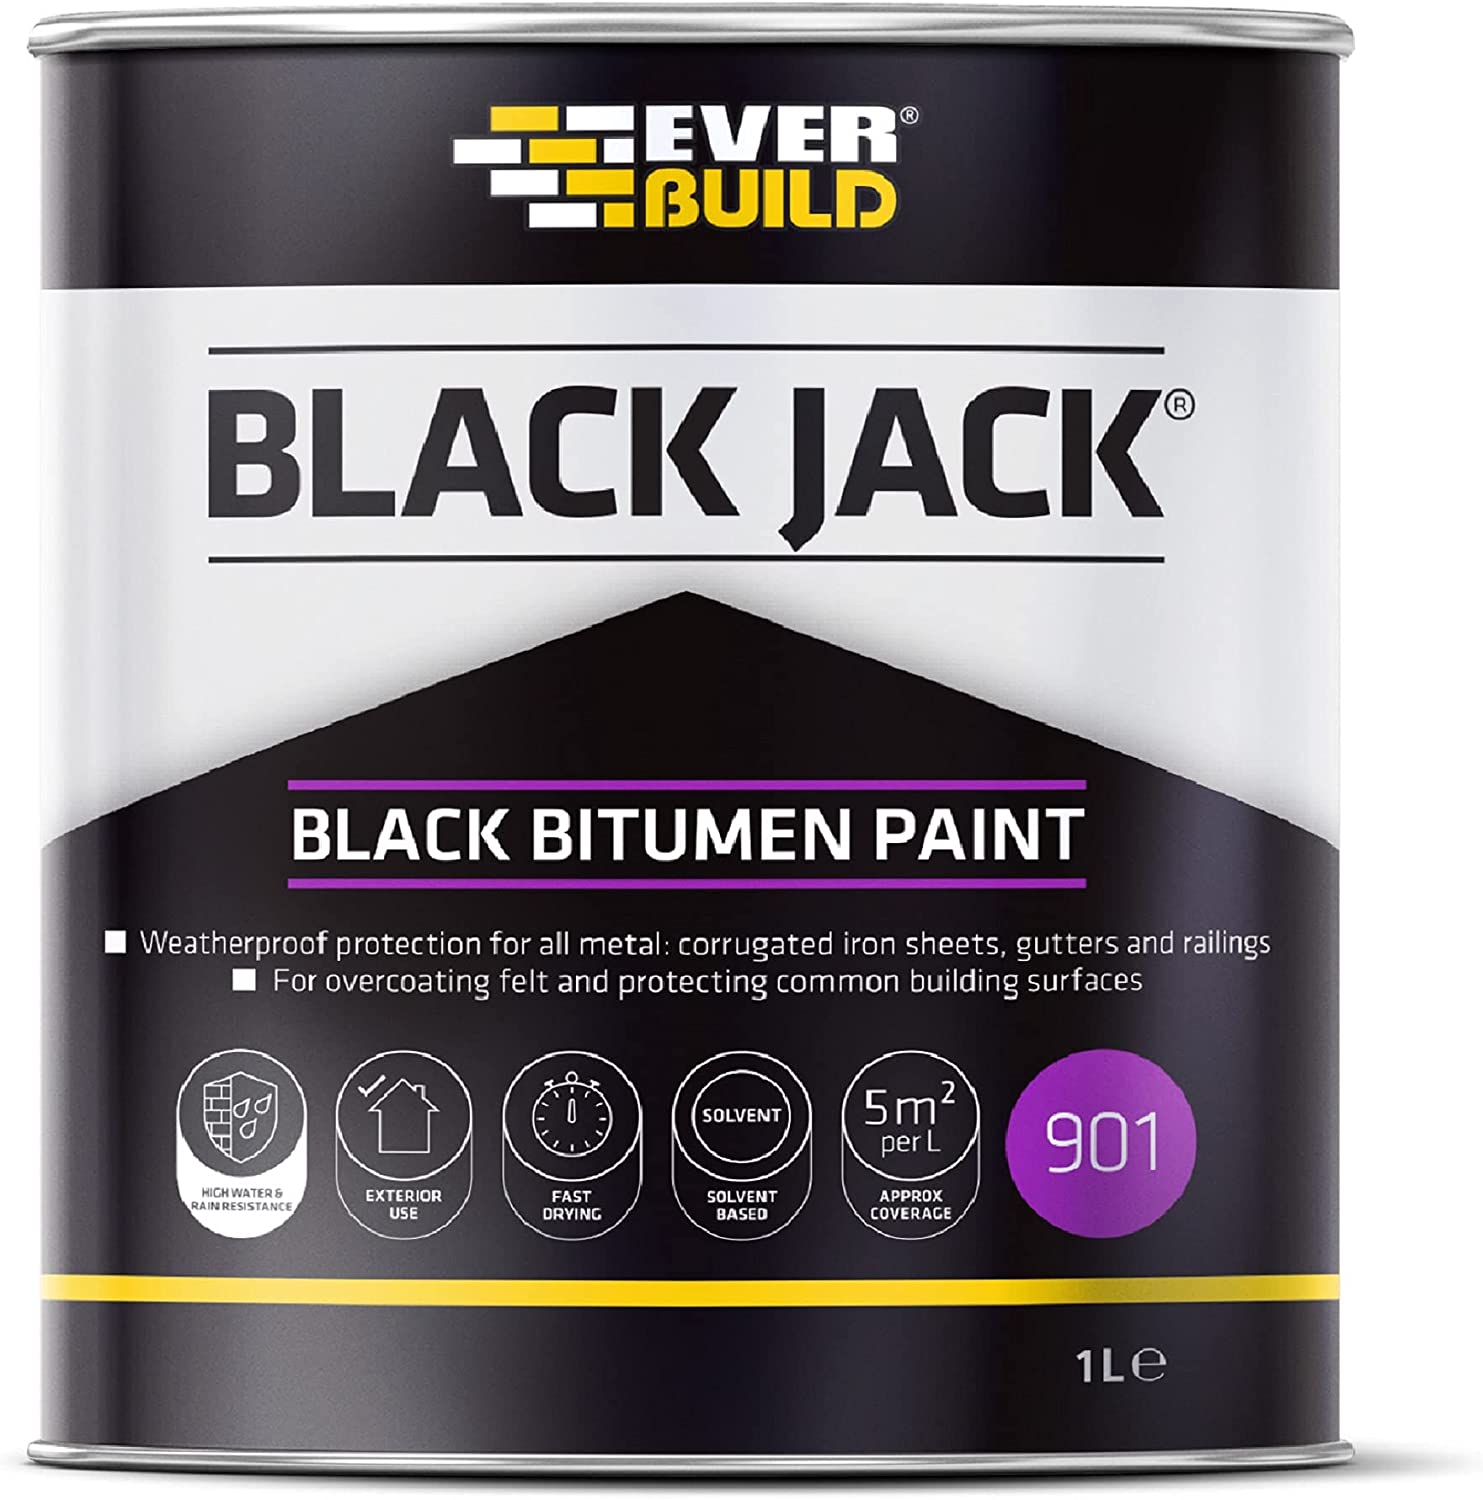 Everbuild Black Jack 901 Black Bitumen Paint 1Ltr